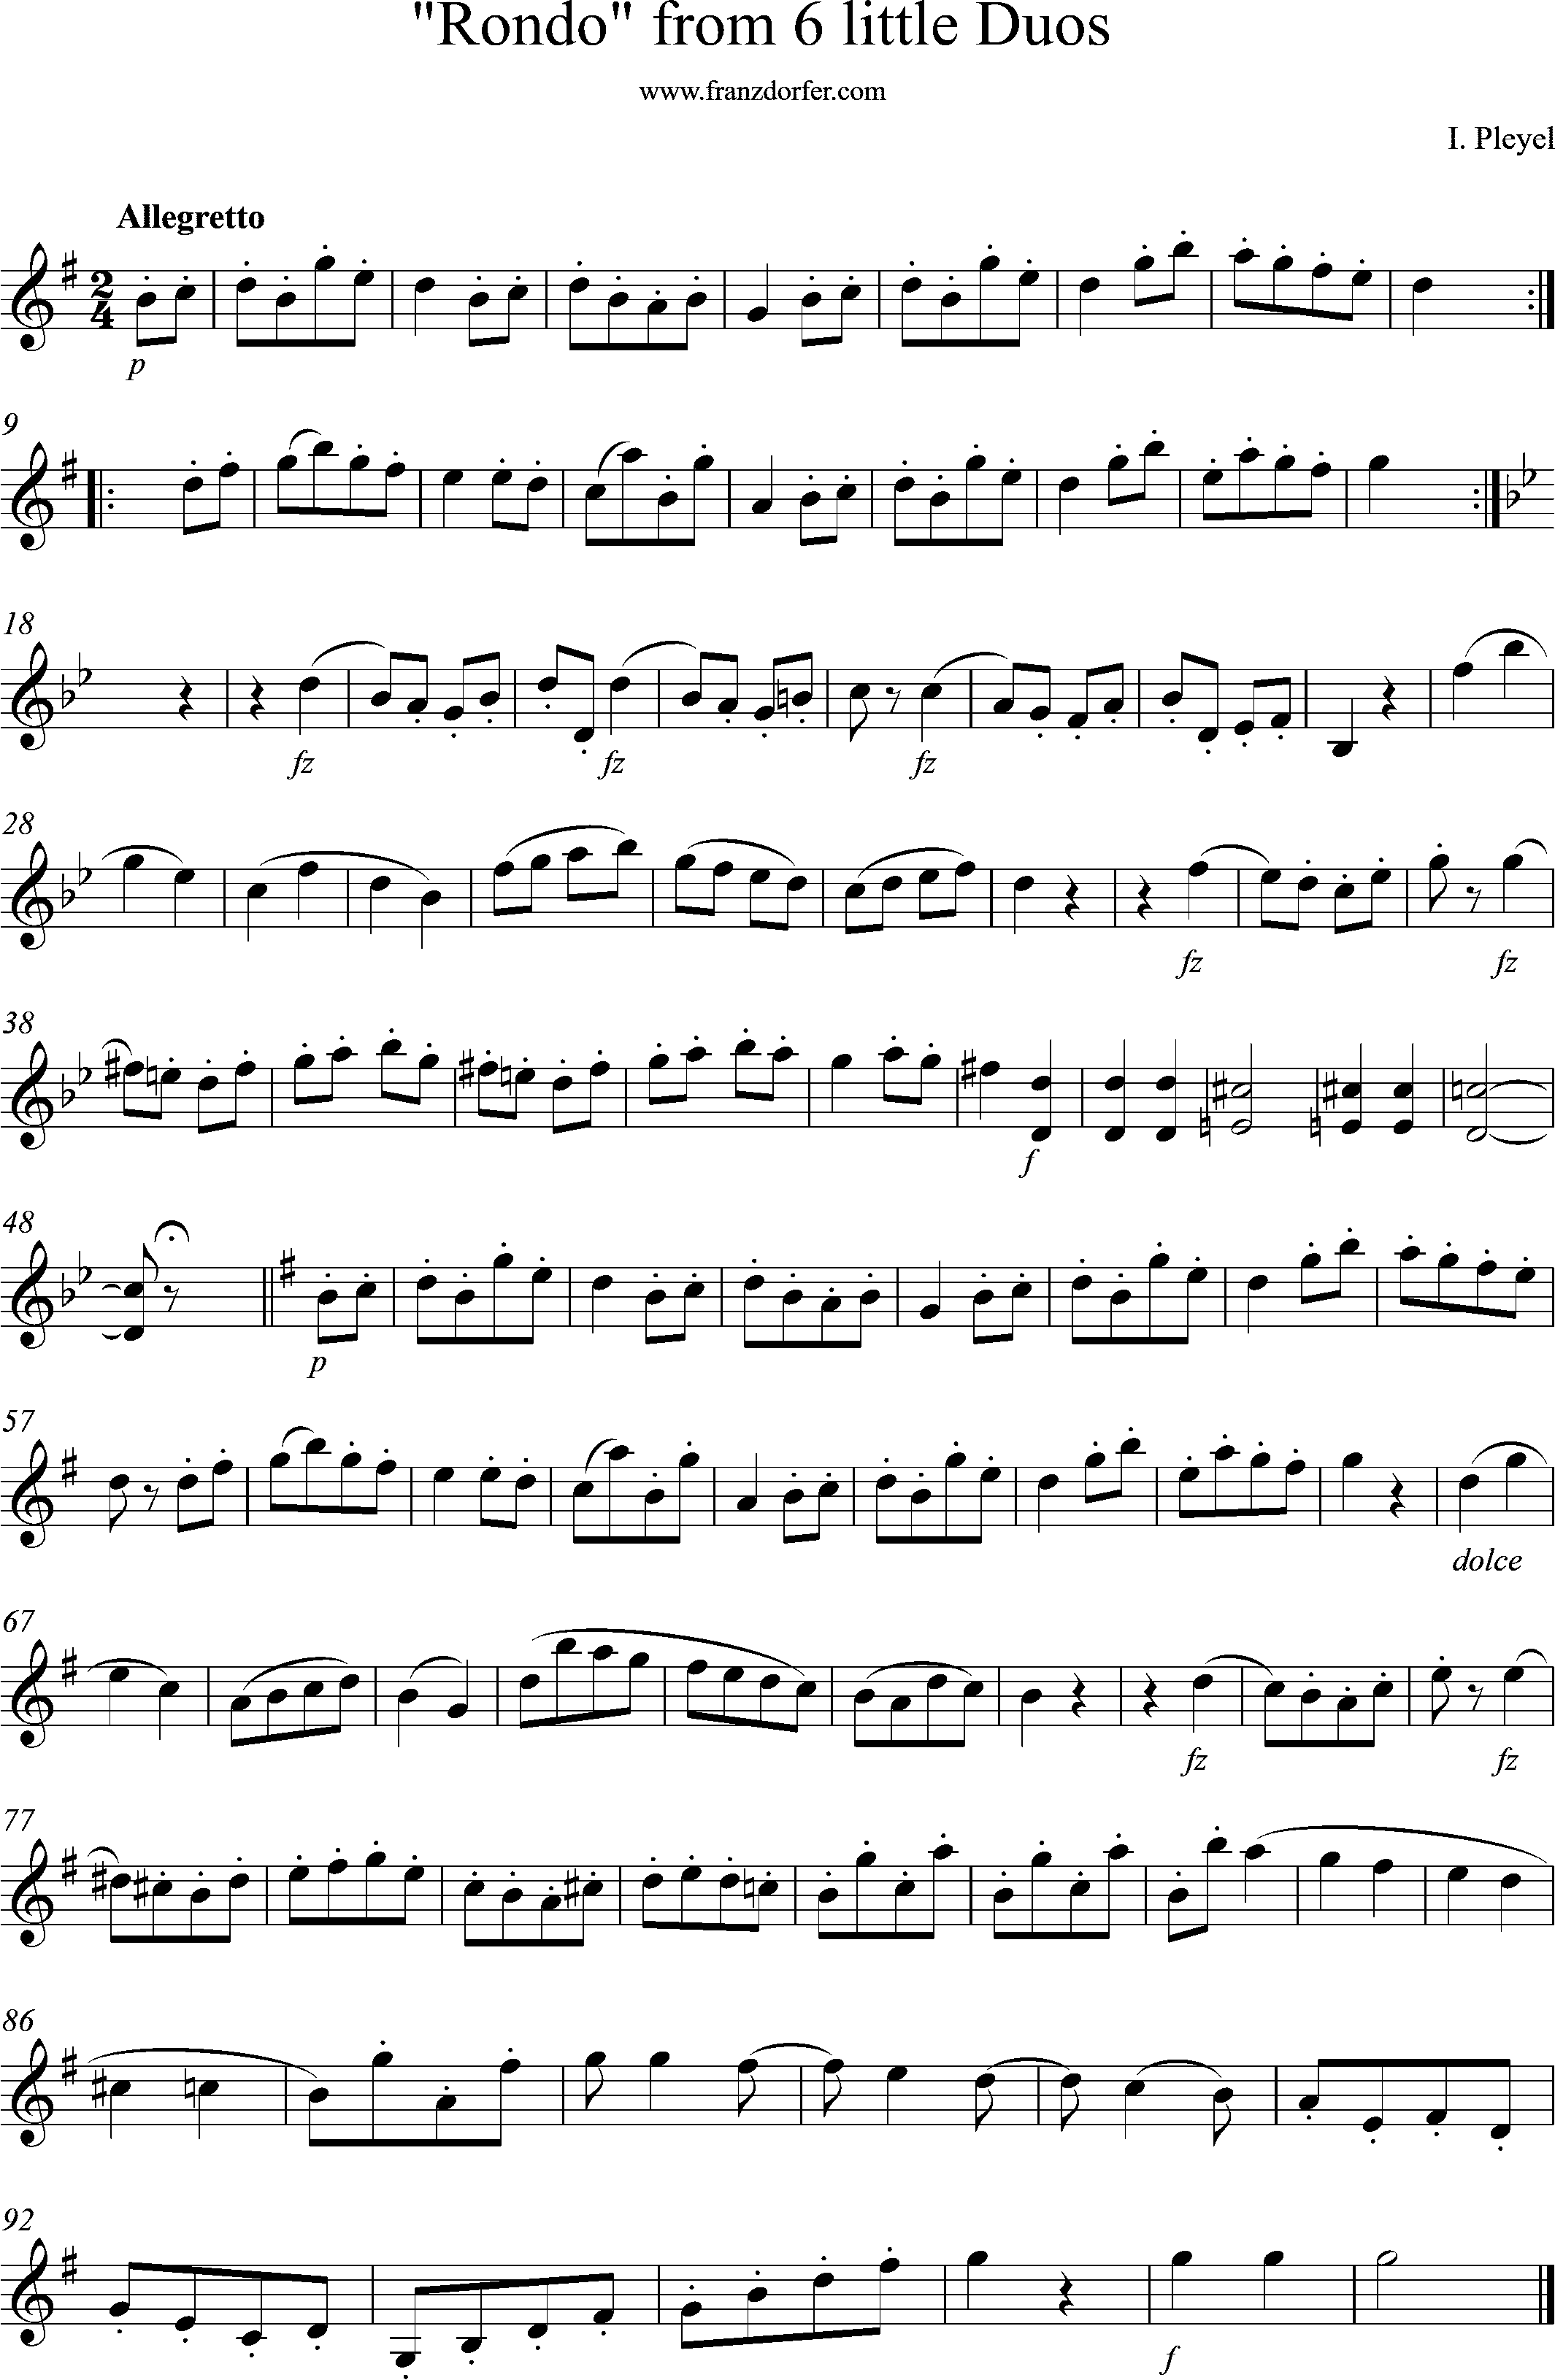 sheetmusic Clarinet rondo, pleyel